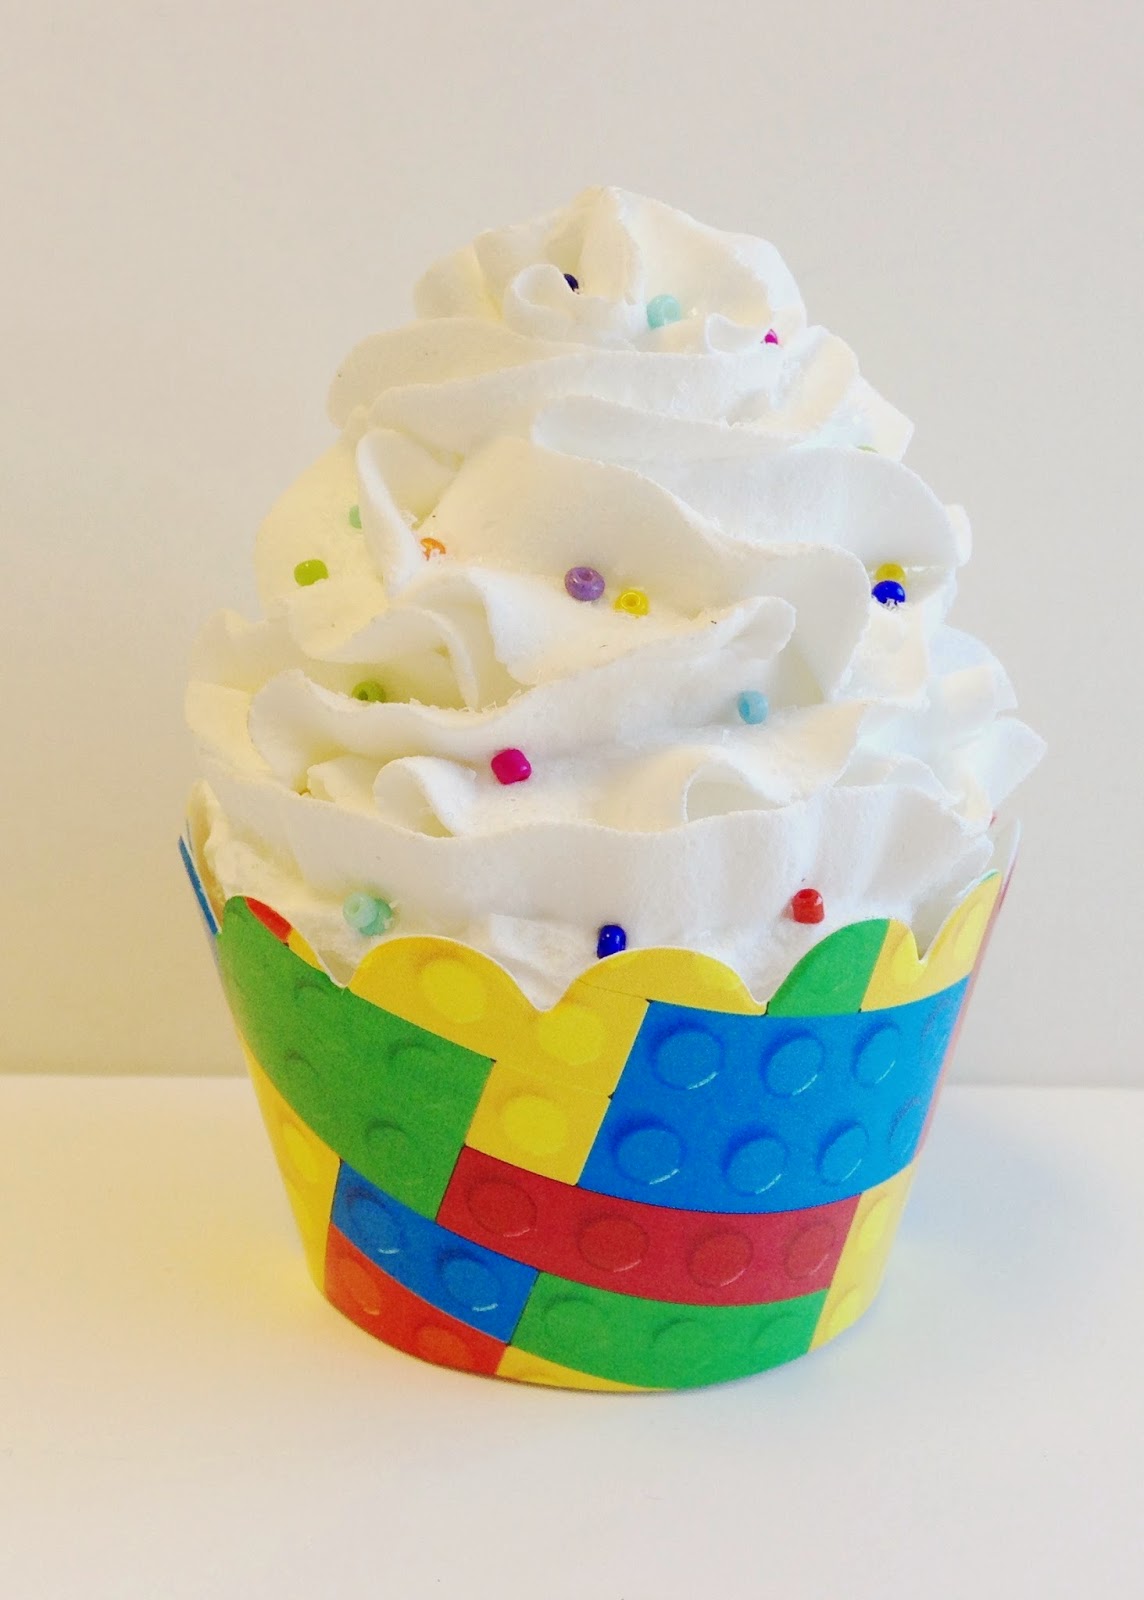 Cake Inspiration: Lego Cupcakes